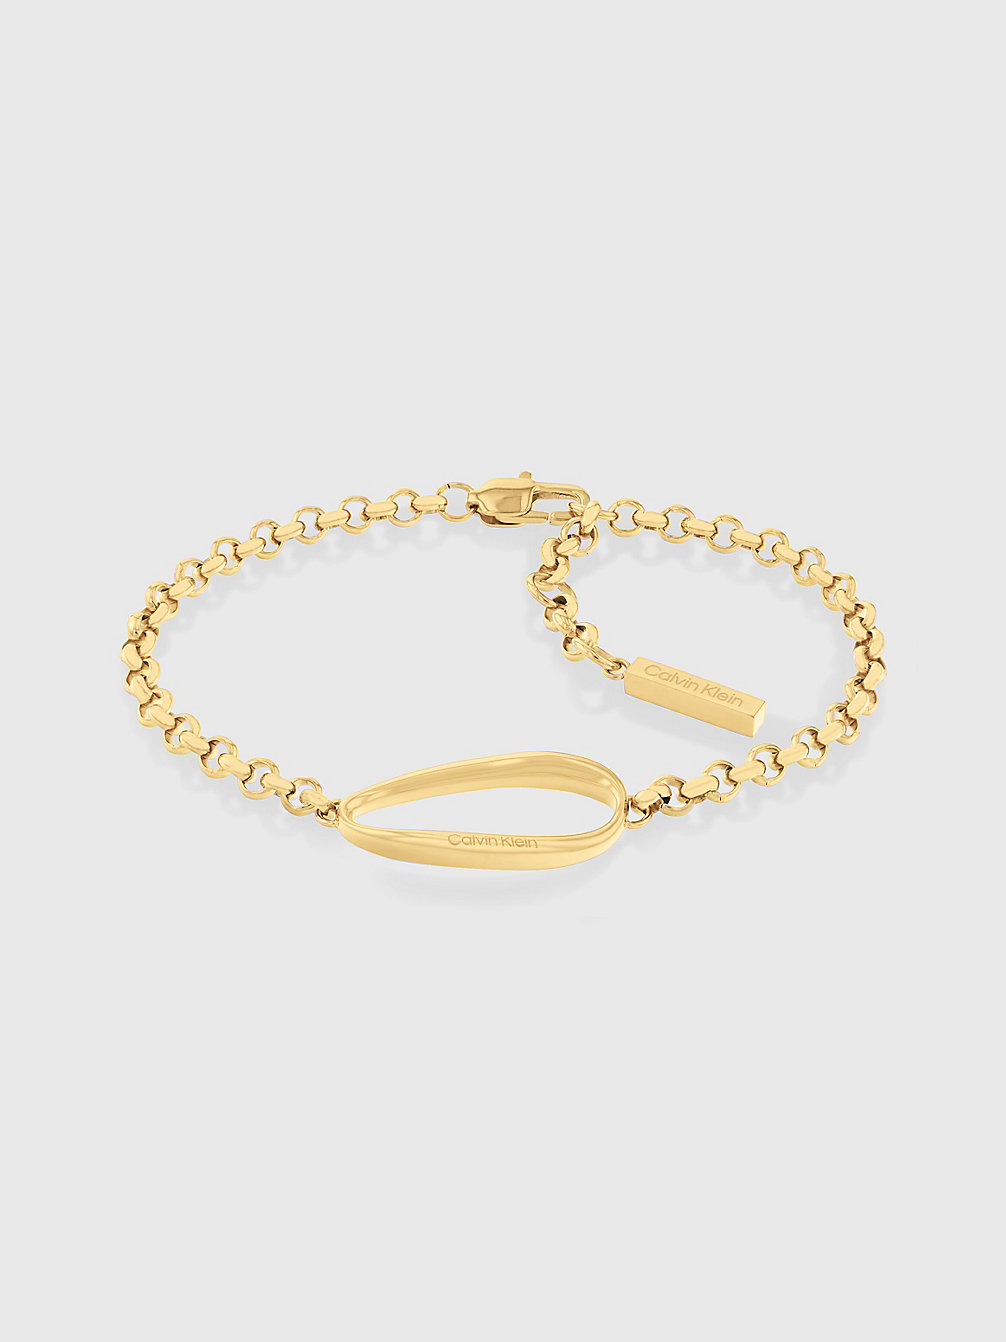 GOLD Bracelet - Playful Organic Shapes undefined women Calvin Klein